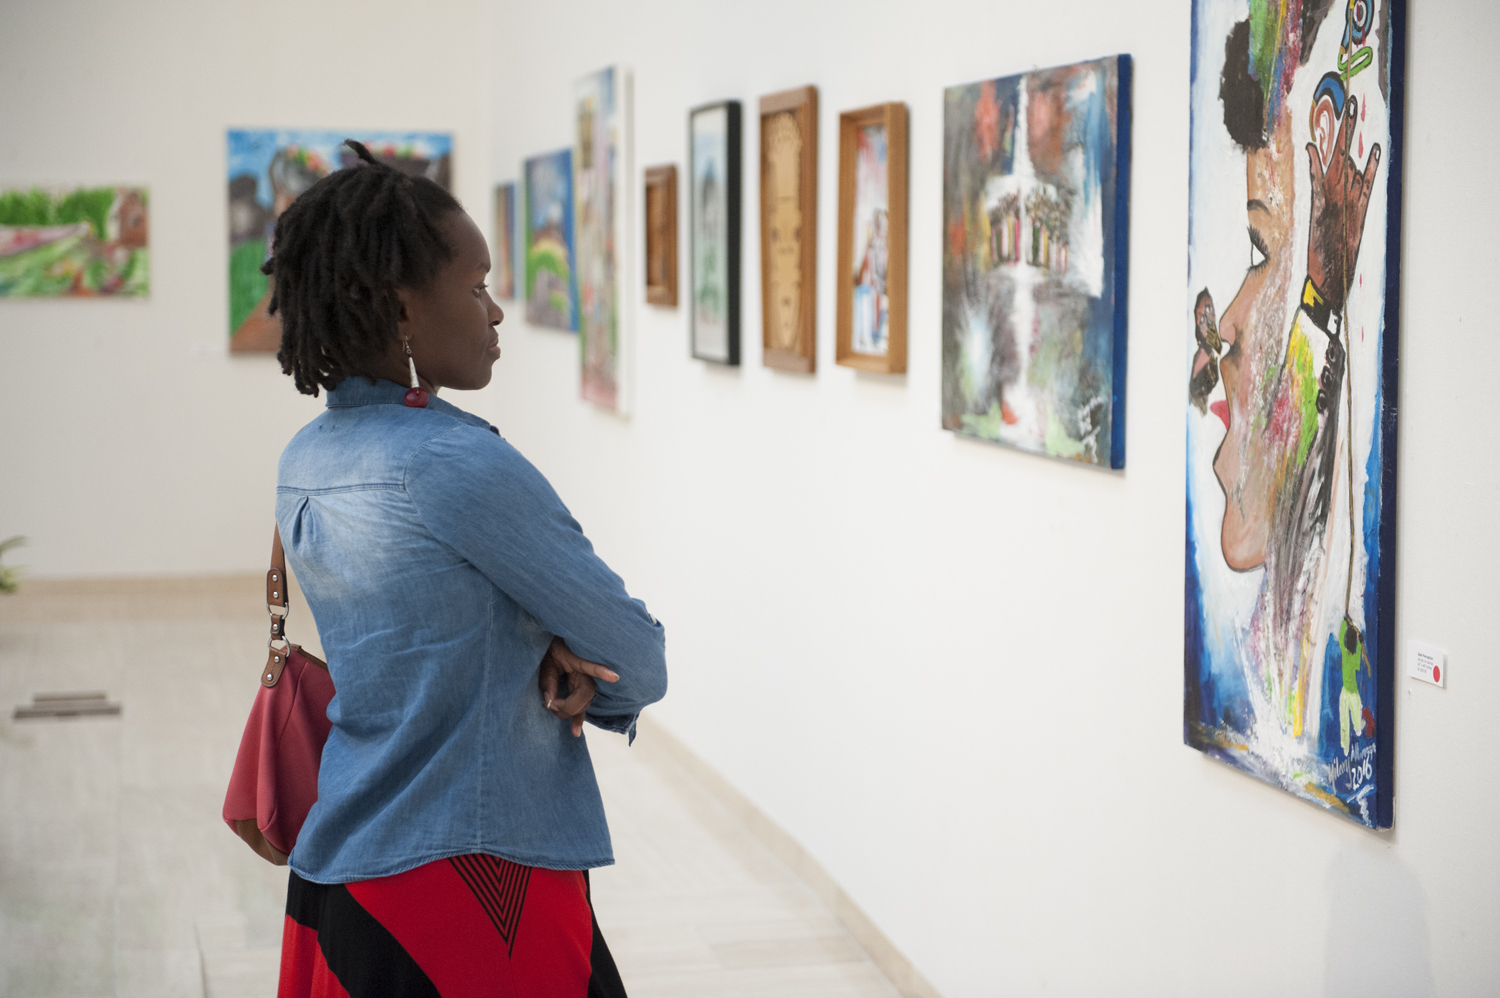 Dark-skinned female looking at colorful artwork on gallery wall.